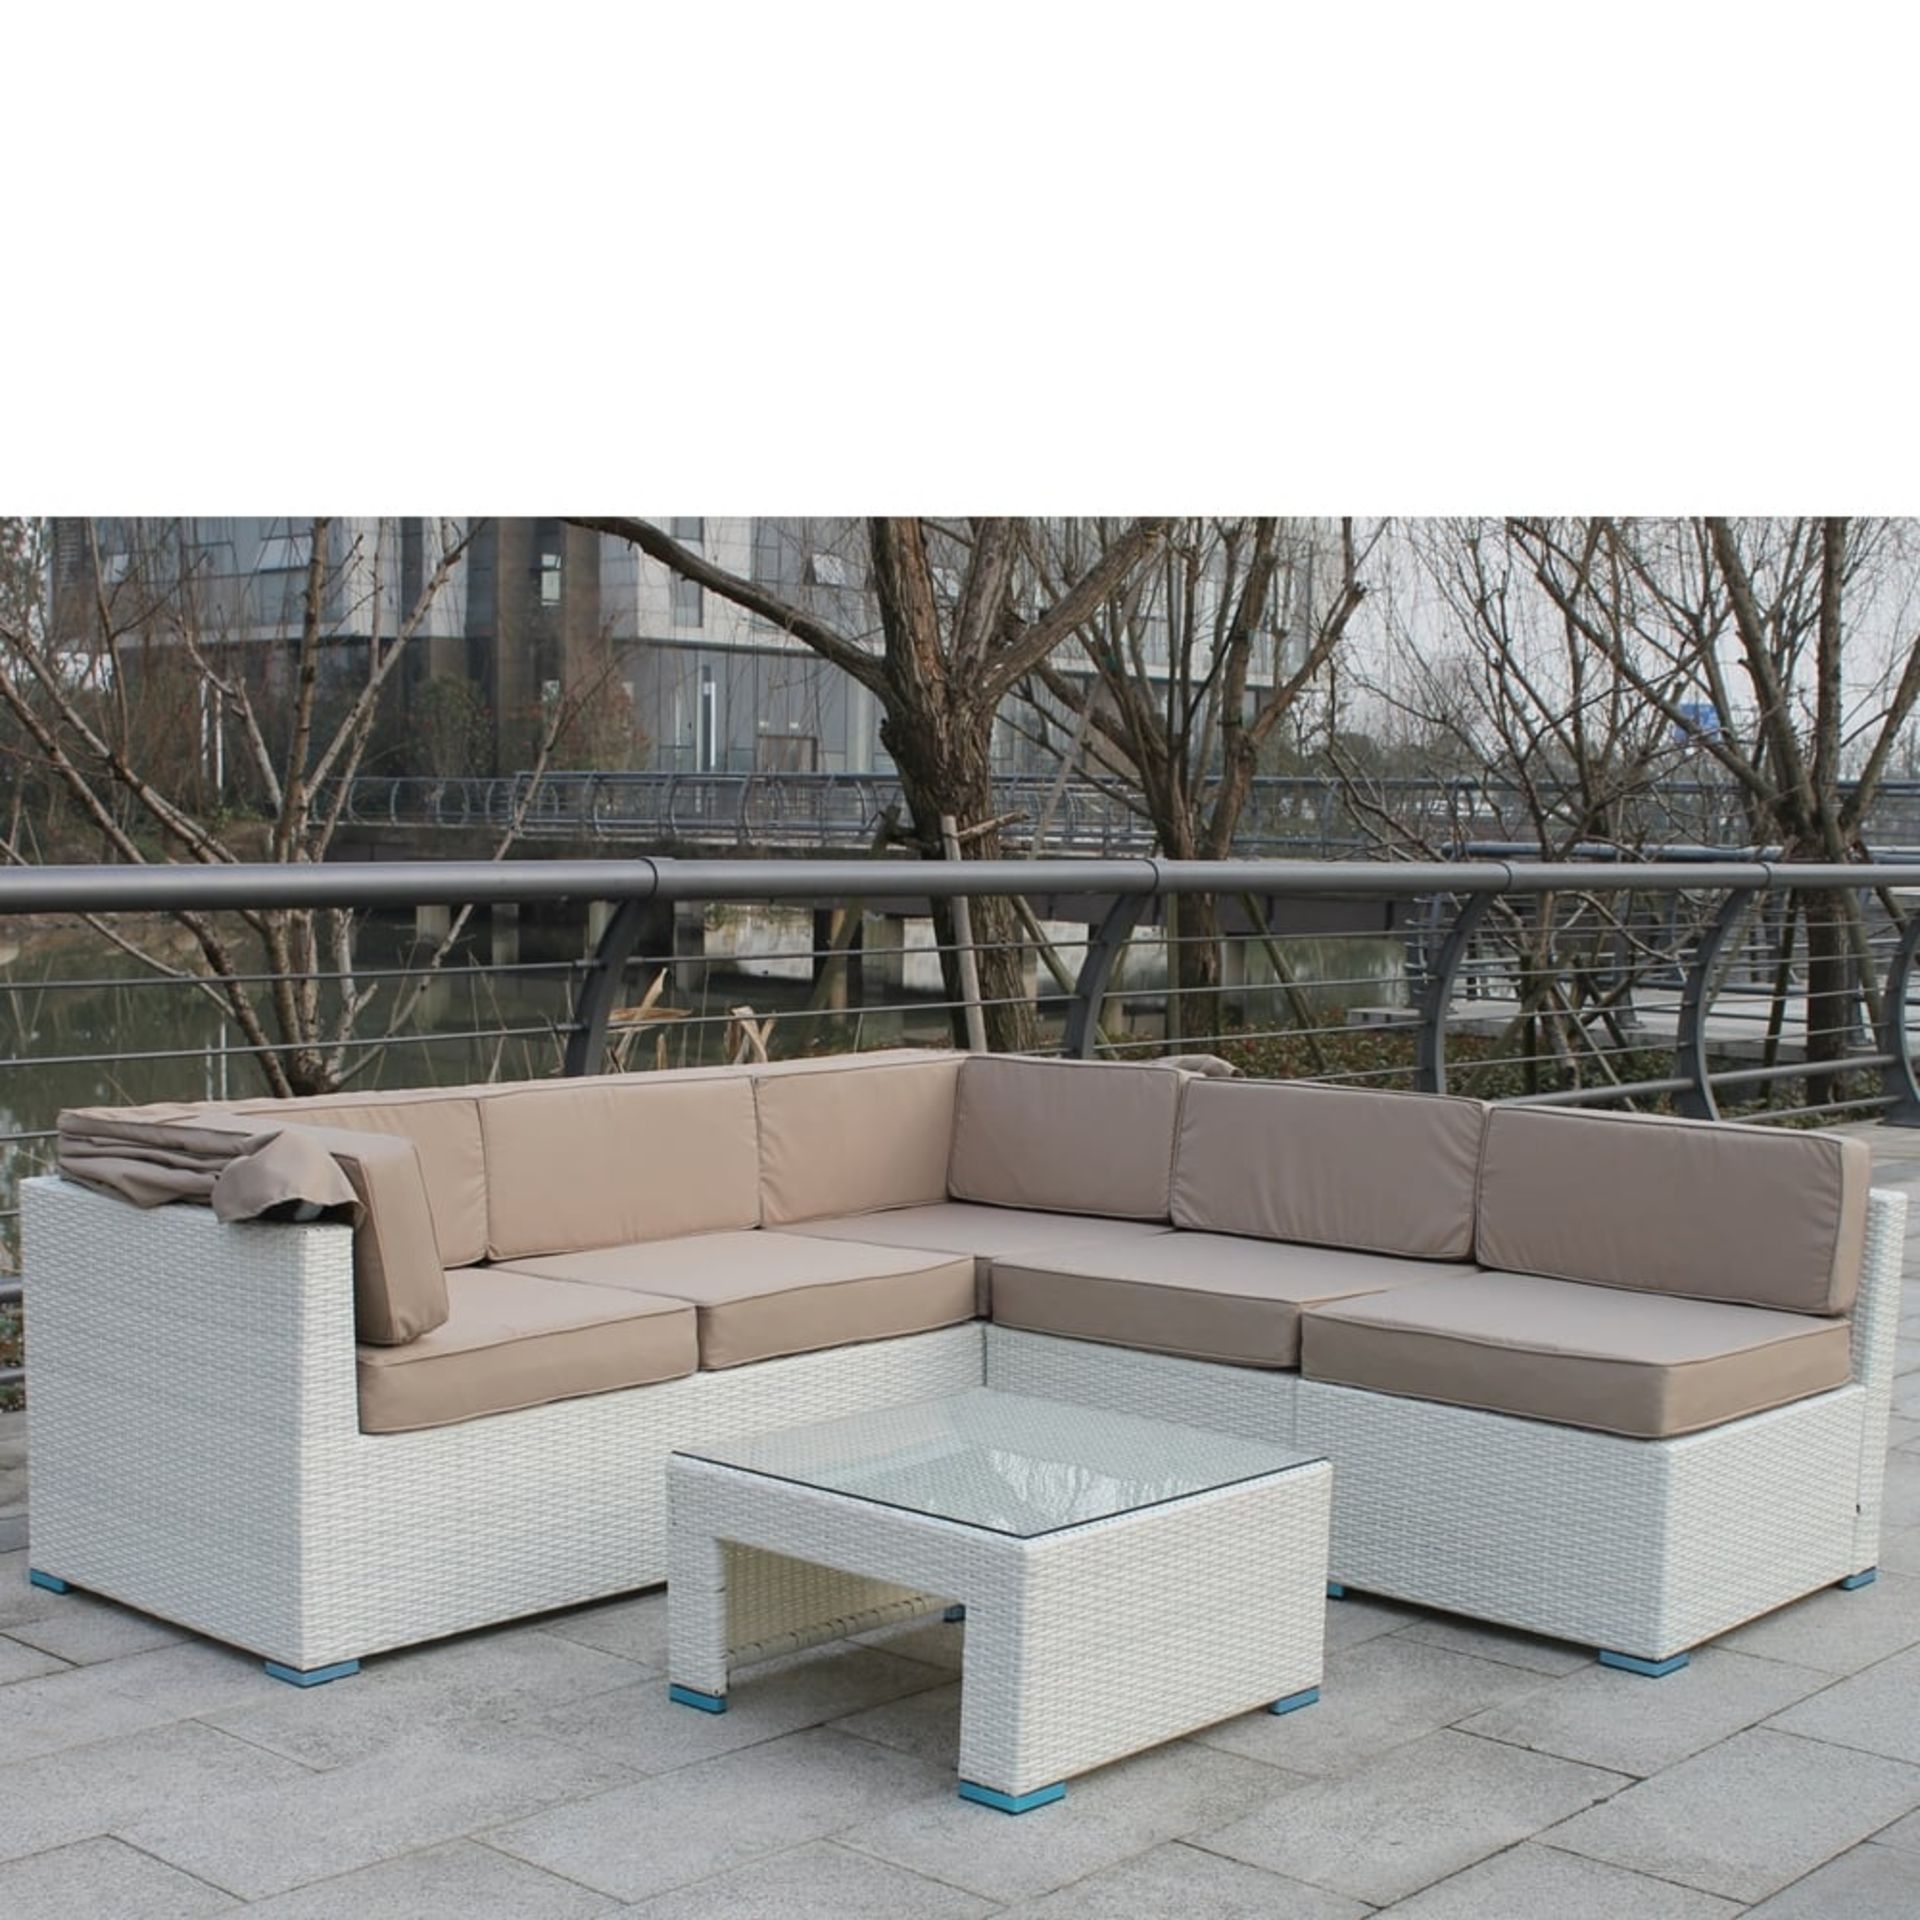 Altrincham Five Seat Rattan Sofa Set with Table new and boxed white pu rattan. - Bild 2 aus 3